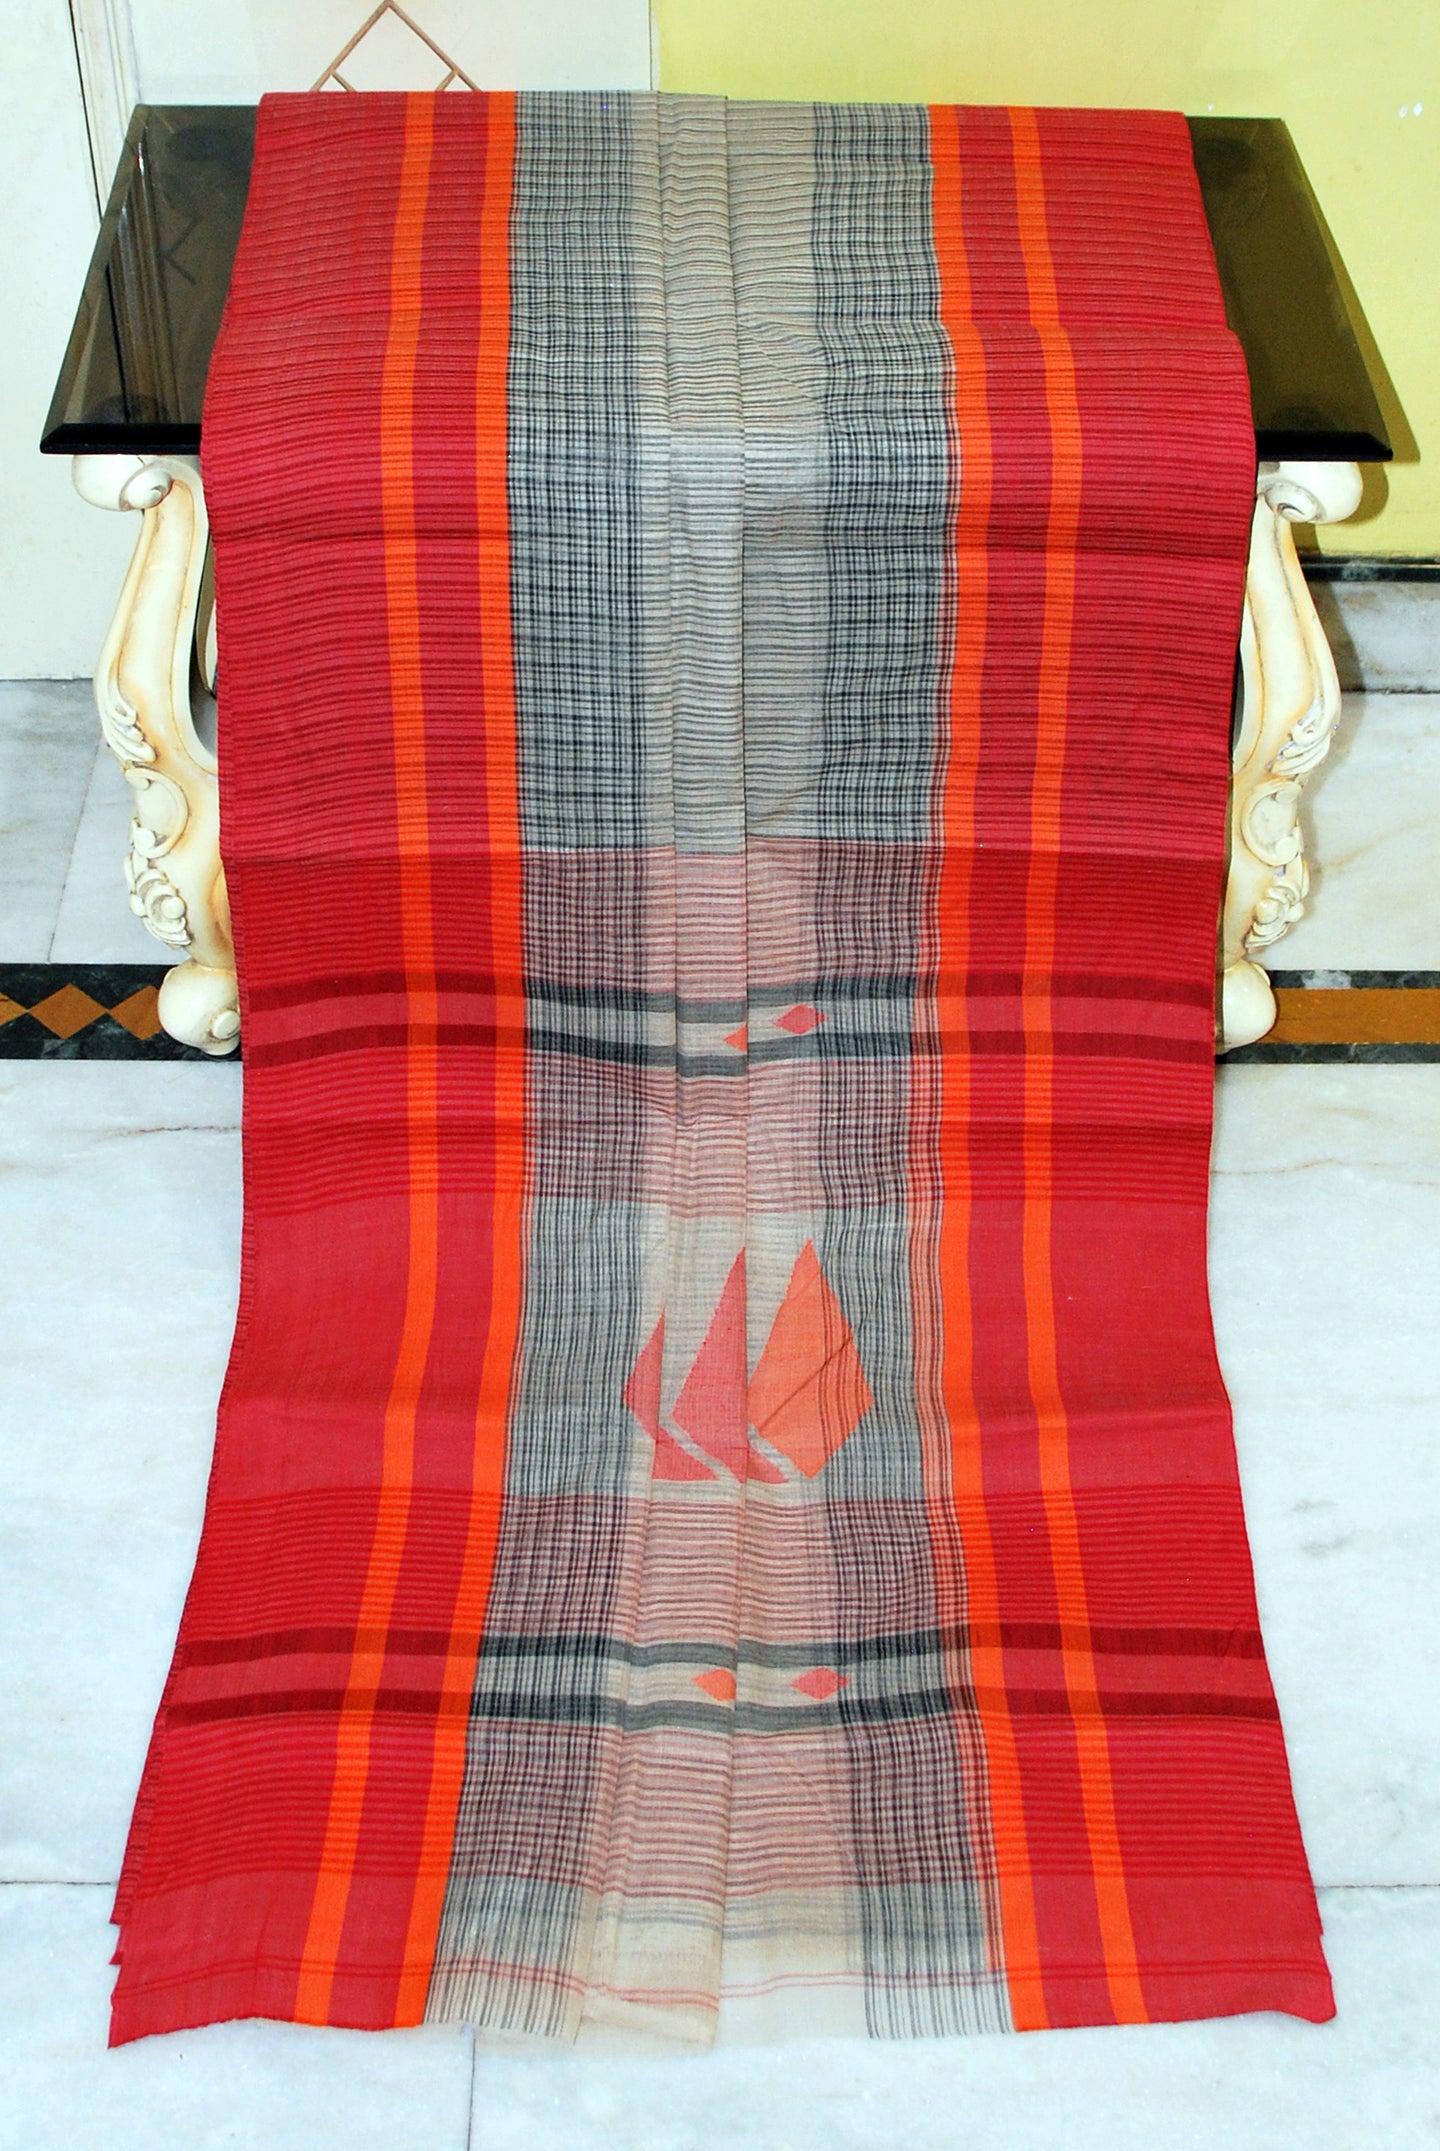 Self Woven Checks and Stripes Matta Bomkai Premium Quality Bengal Handloom Cotton Saree in Beige, Black, Red and Orange